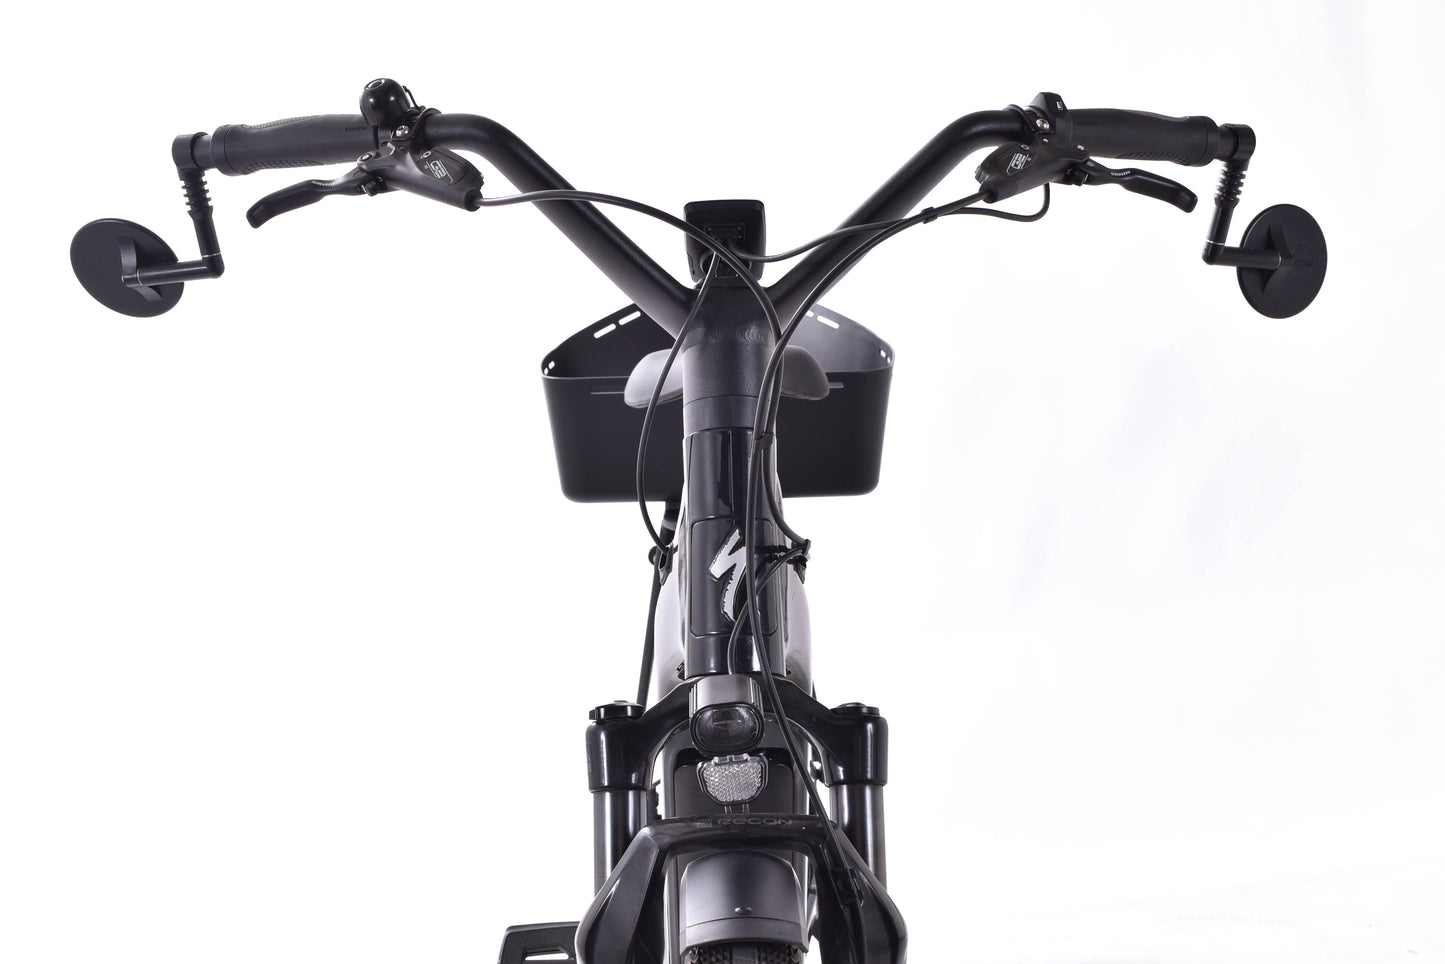 USED Specialized Turbo Como 5.0 IGH Small Electric Bike Internal Gear Hub Belt Driven Step Thru in Black